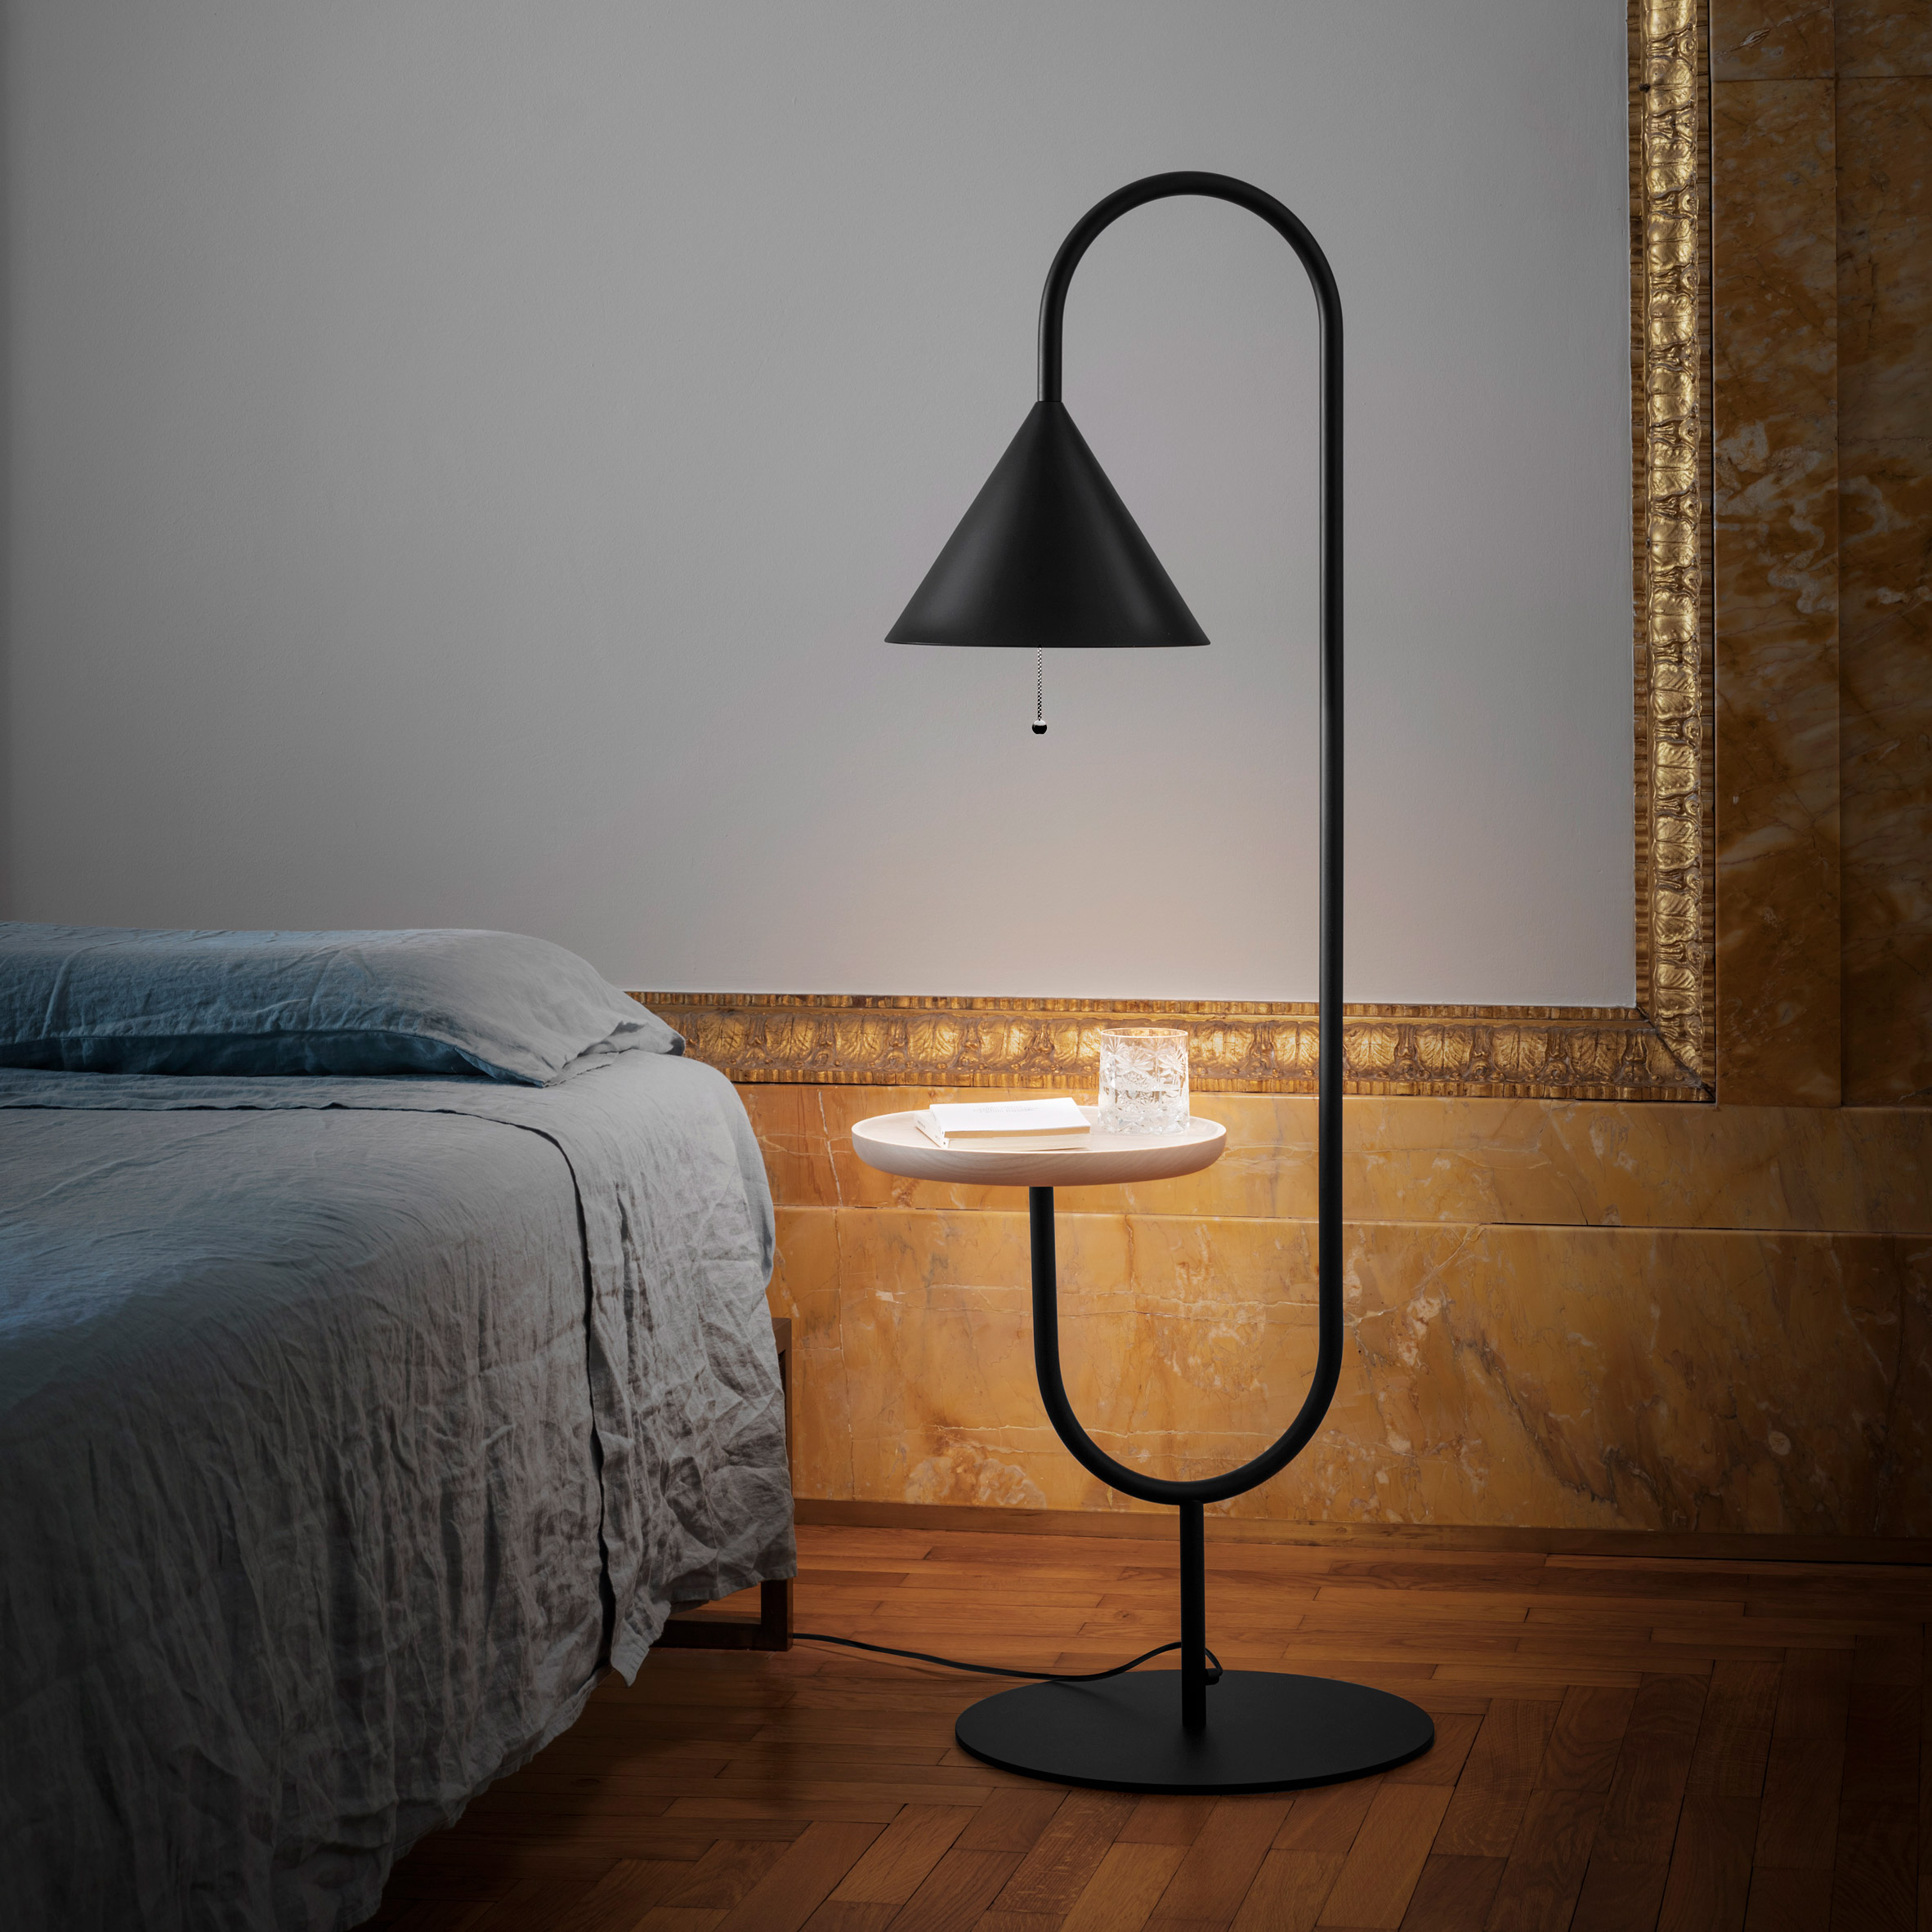 Ozz lamps by Paolo Cappello and Simone Sabatti for Miniforms